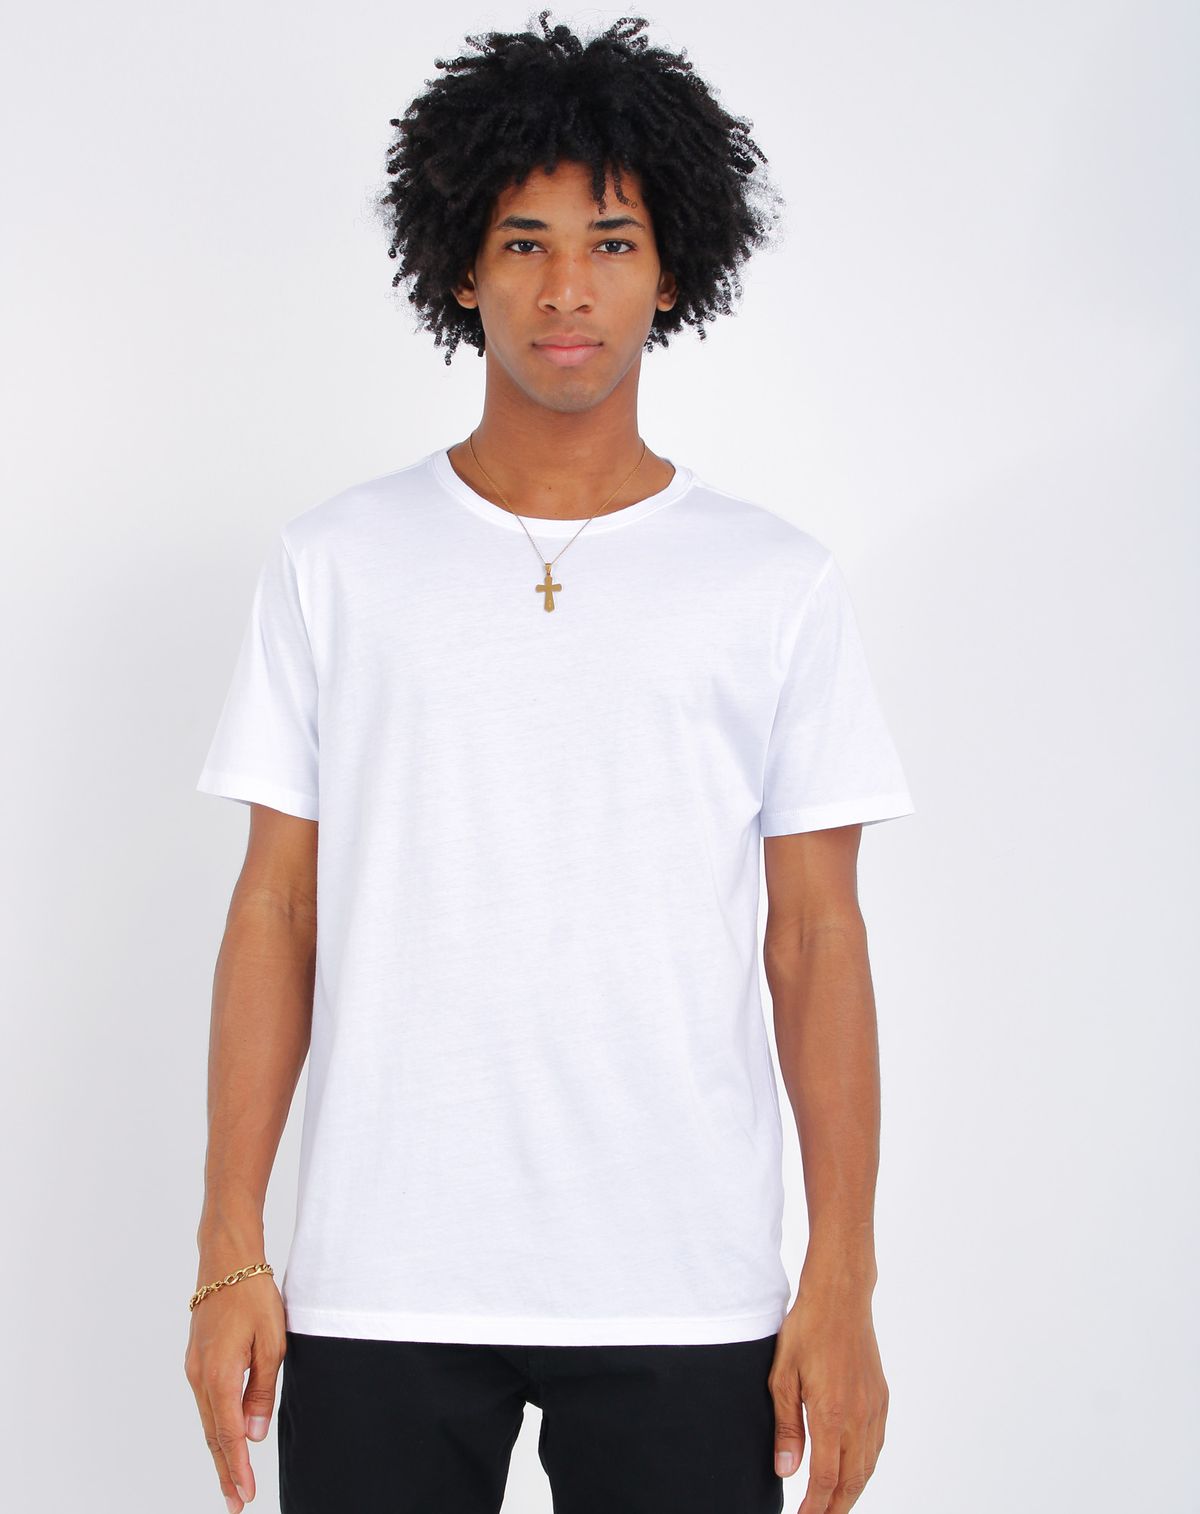 682644003-camiseta-manga-curta-masculina-basica-branco-g-dc5